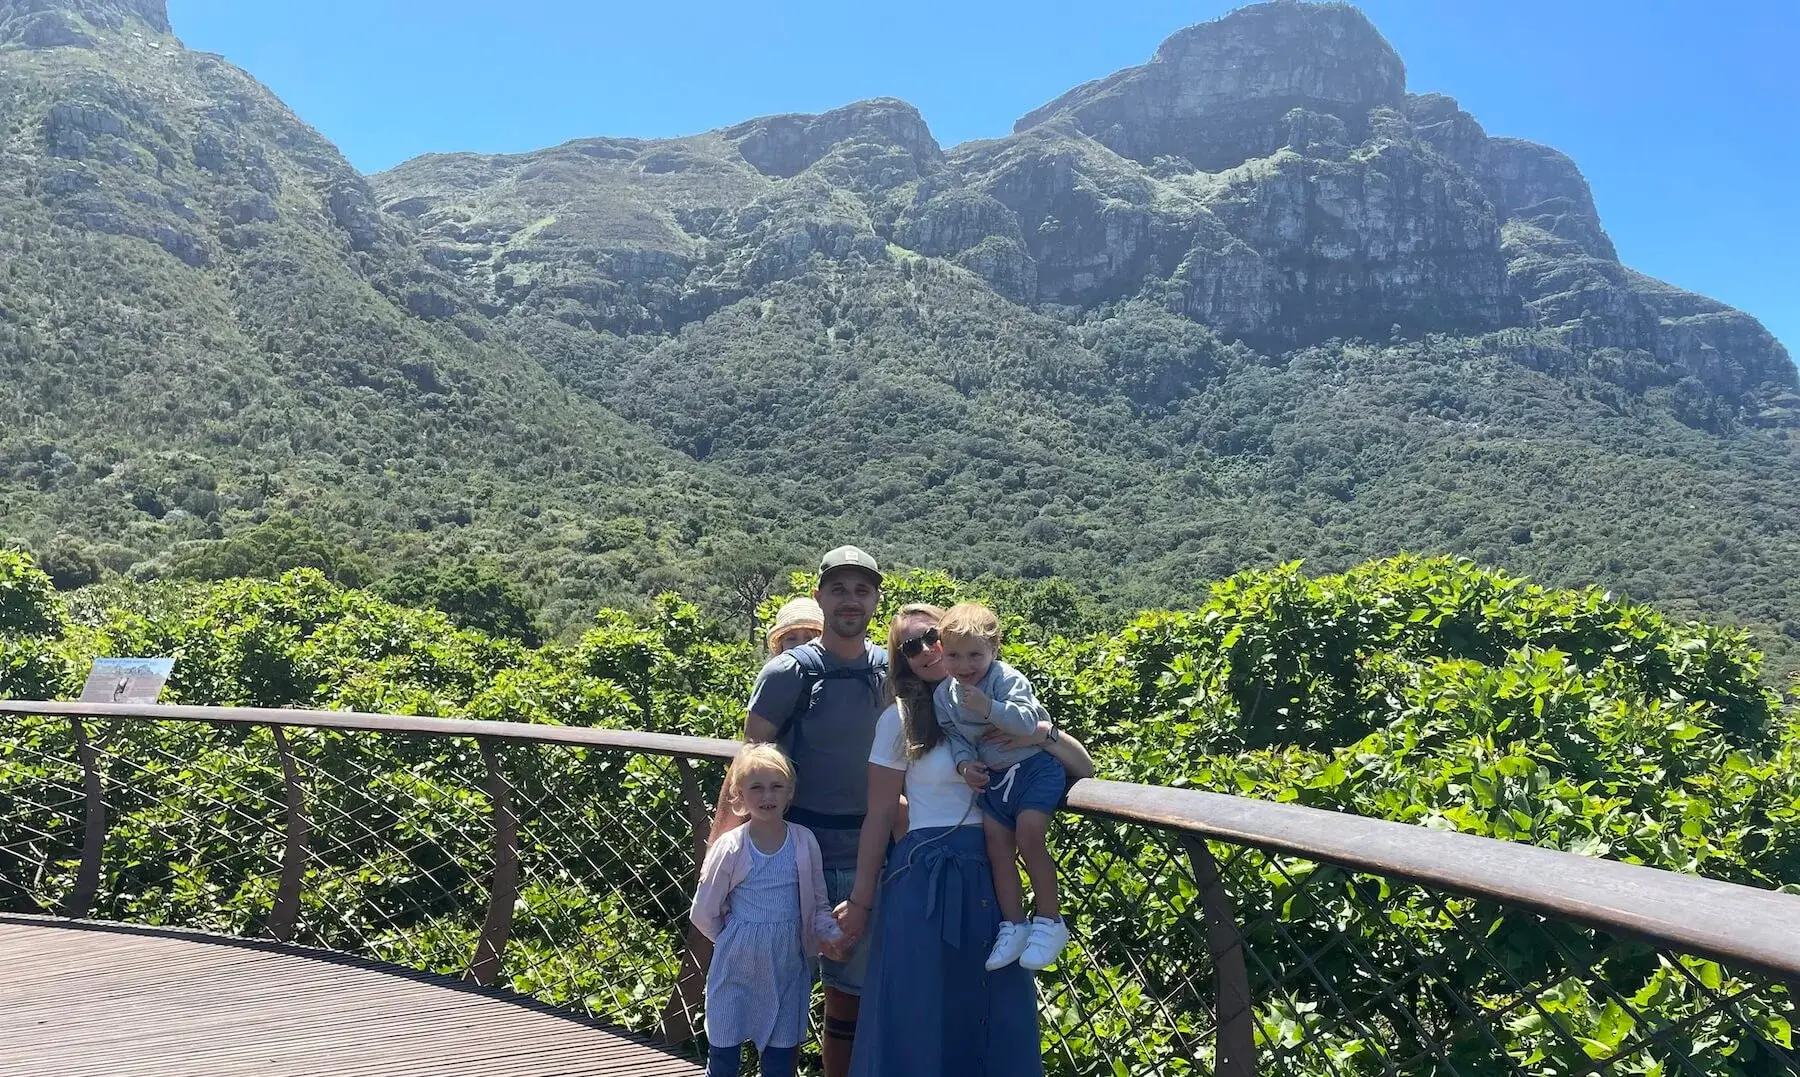 My family at Kirstenbosch National Botanical Garden, near Cape Town South Africa